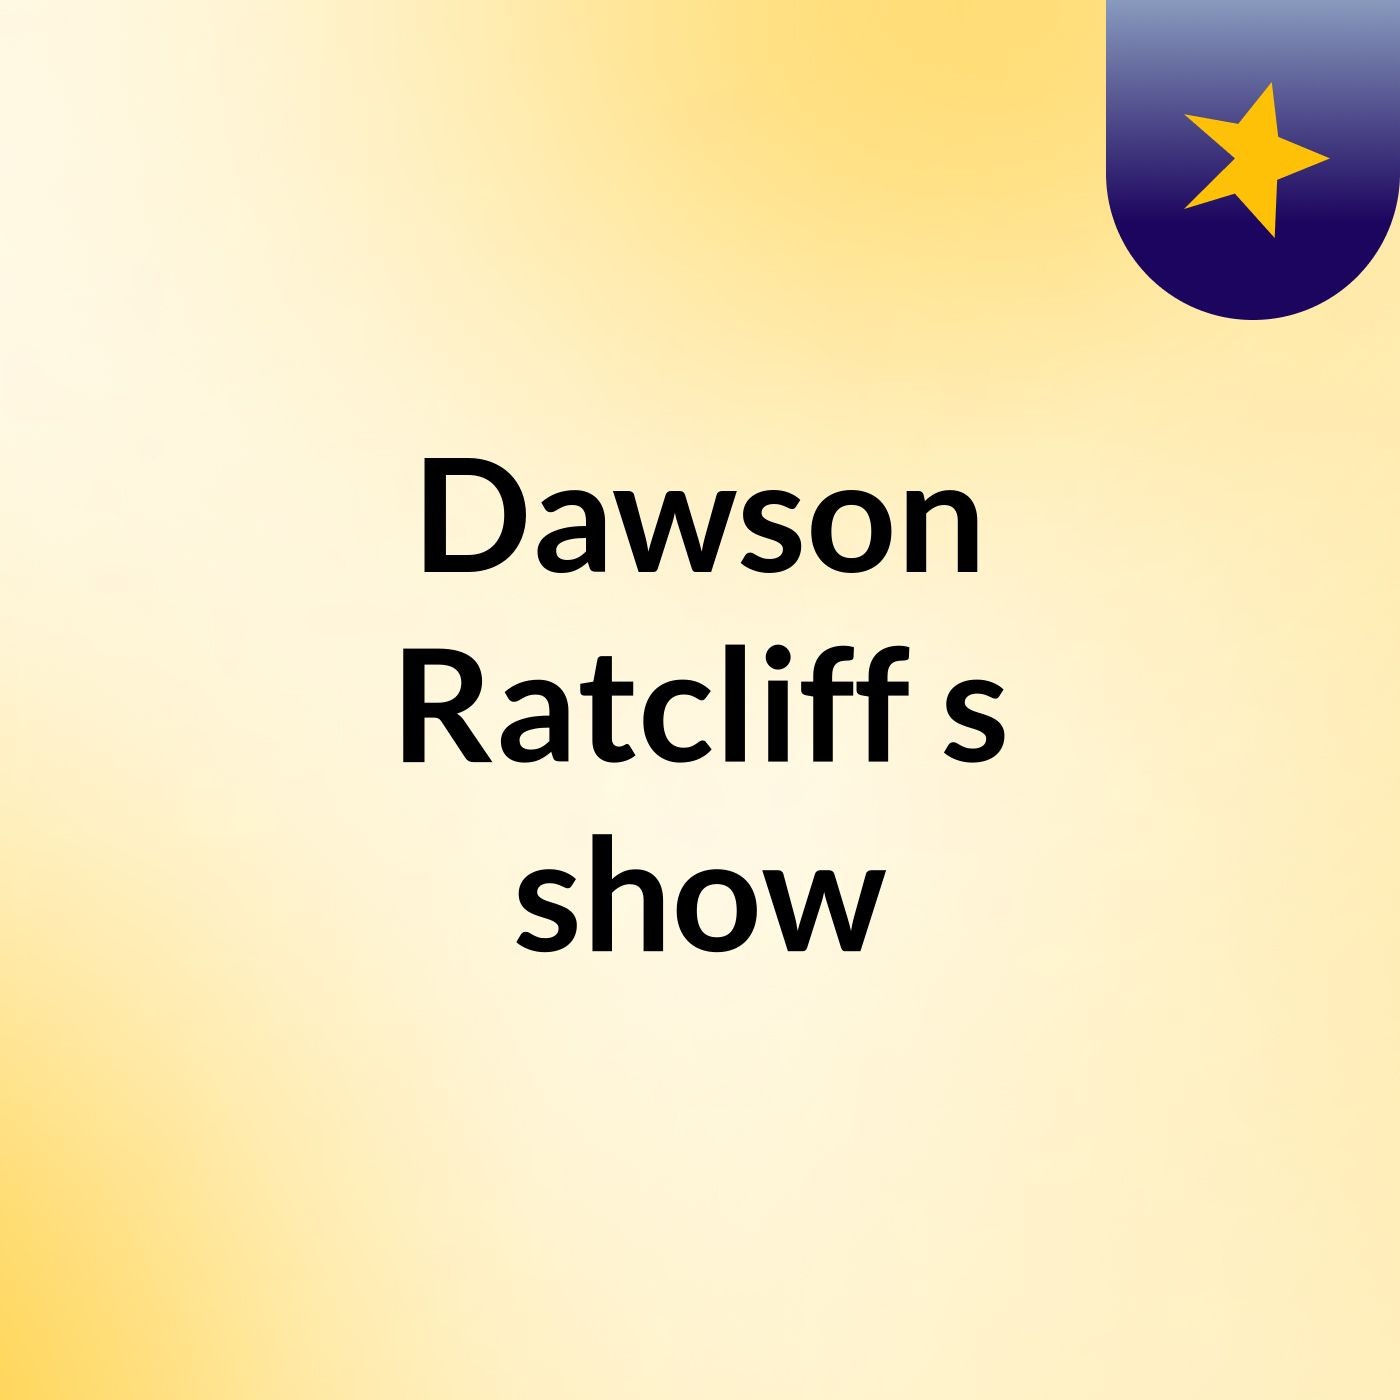 Dawson Ratcliff's show